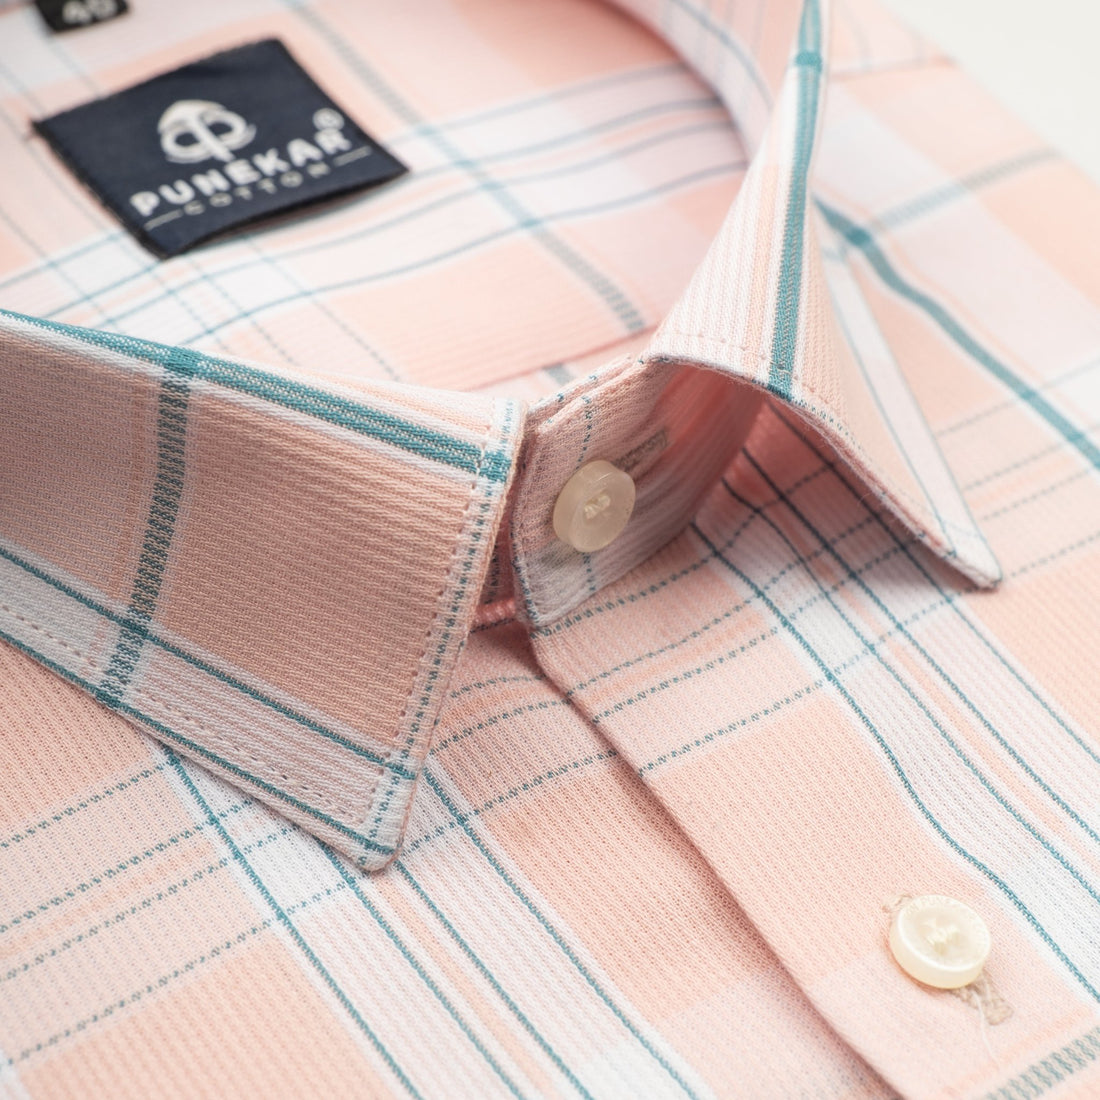 Light Pink Color Tartan Checks Cotton Causal Shirt For Men - Punekar Cotton